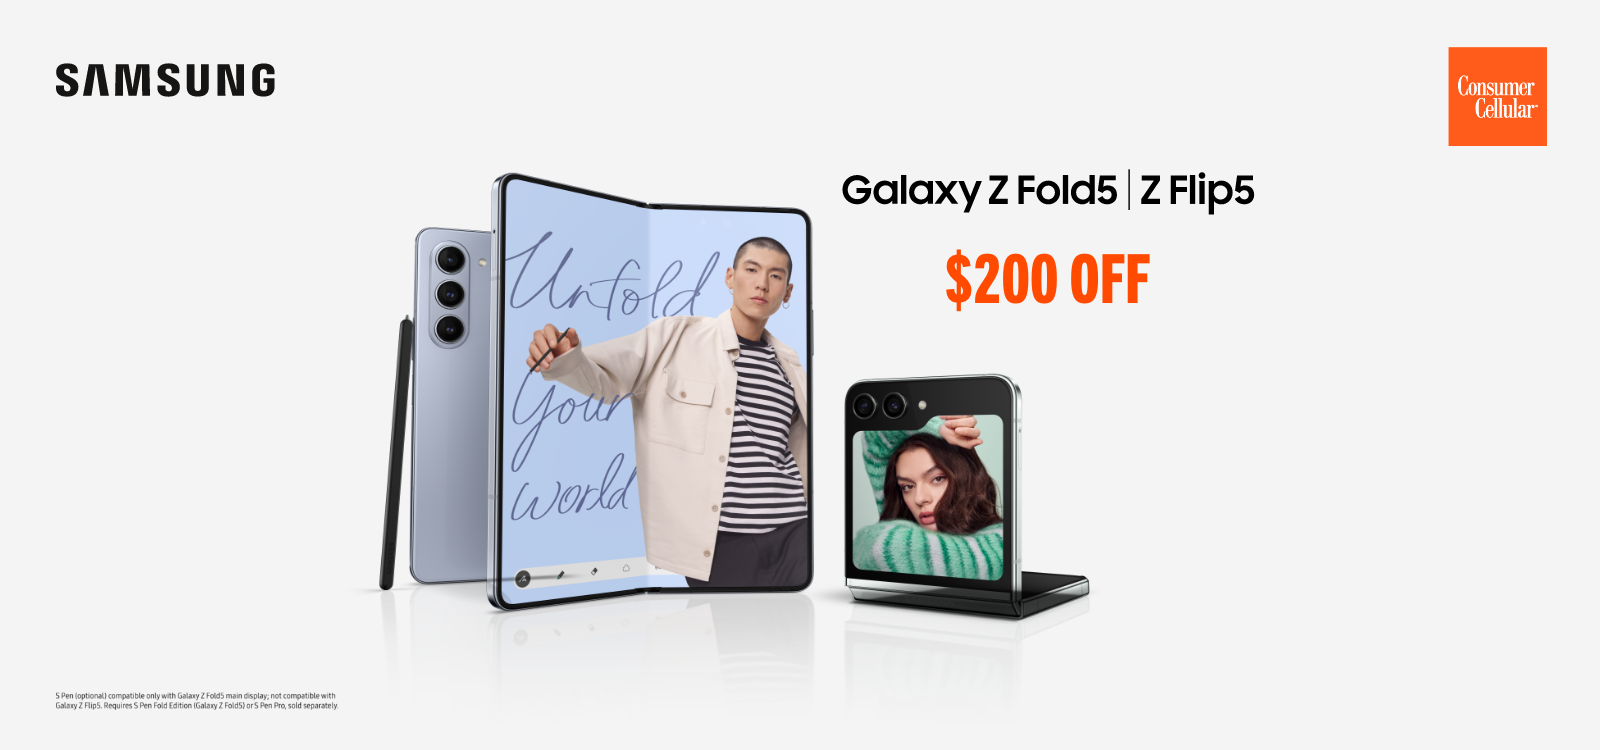 Explore Galaxy Z Fold5